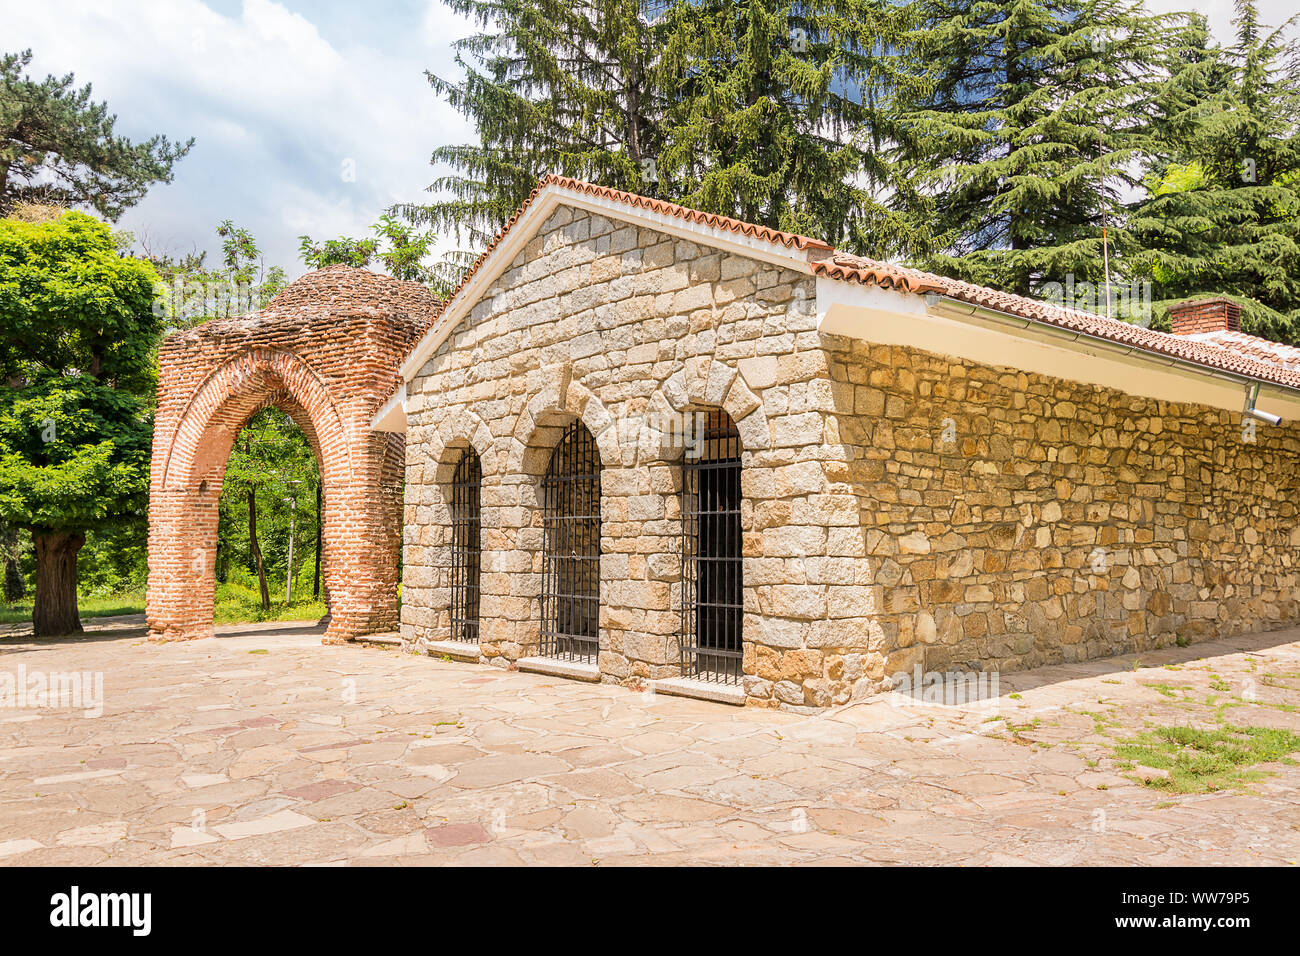 Thracian Tomb of Kazanlak in Bulgaria - A UNESCO World Heritage Site Stock Photo